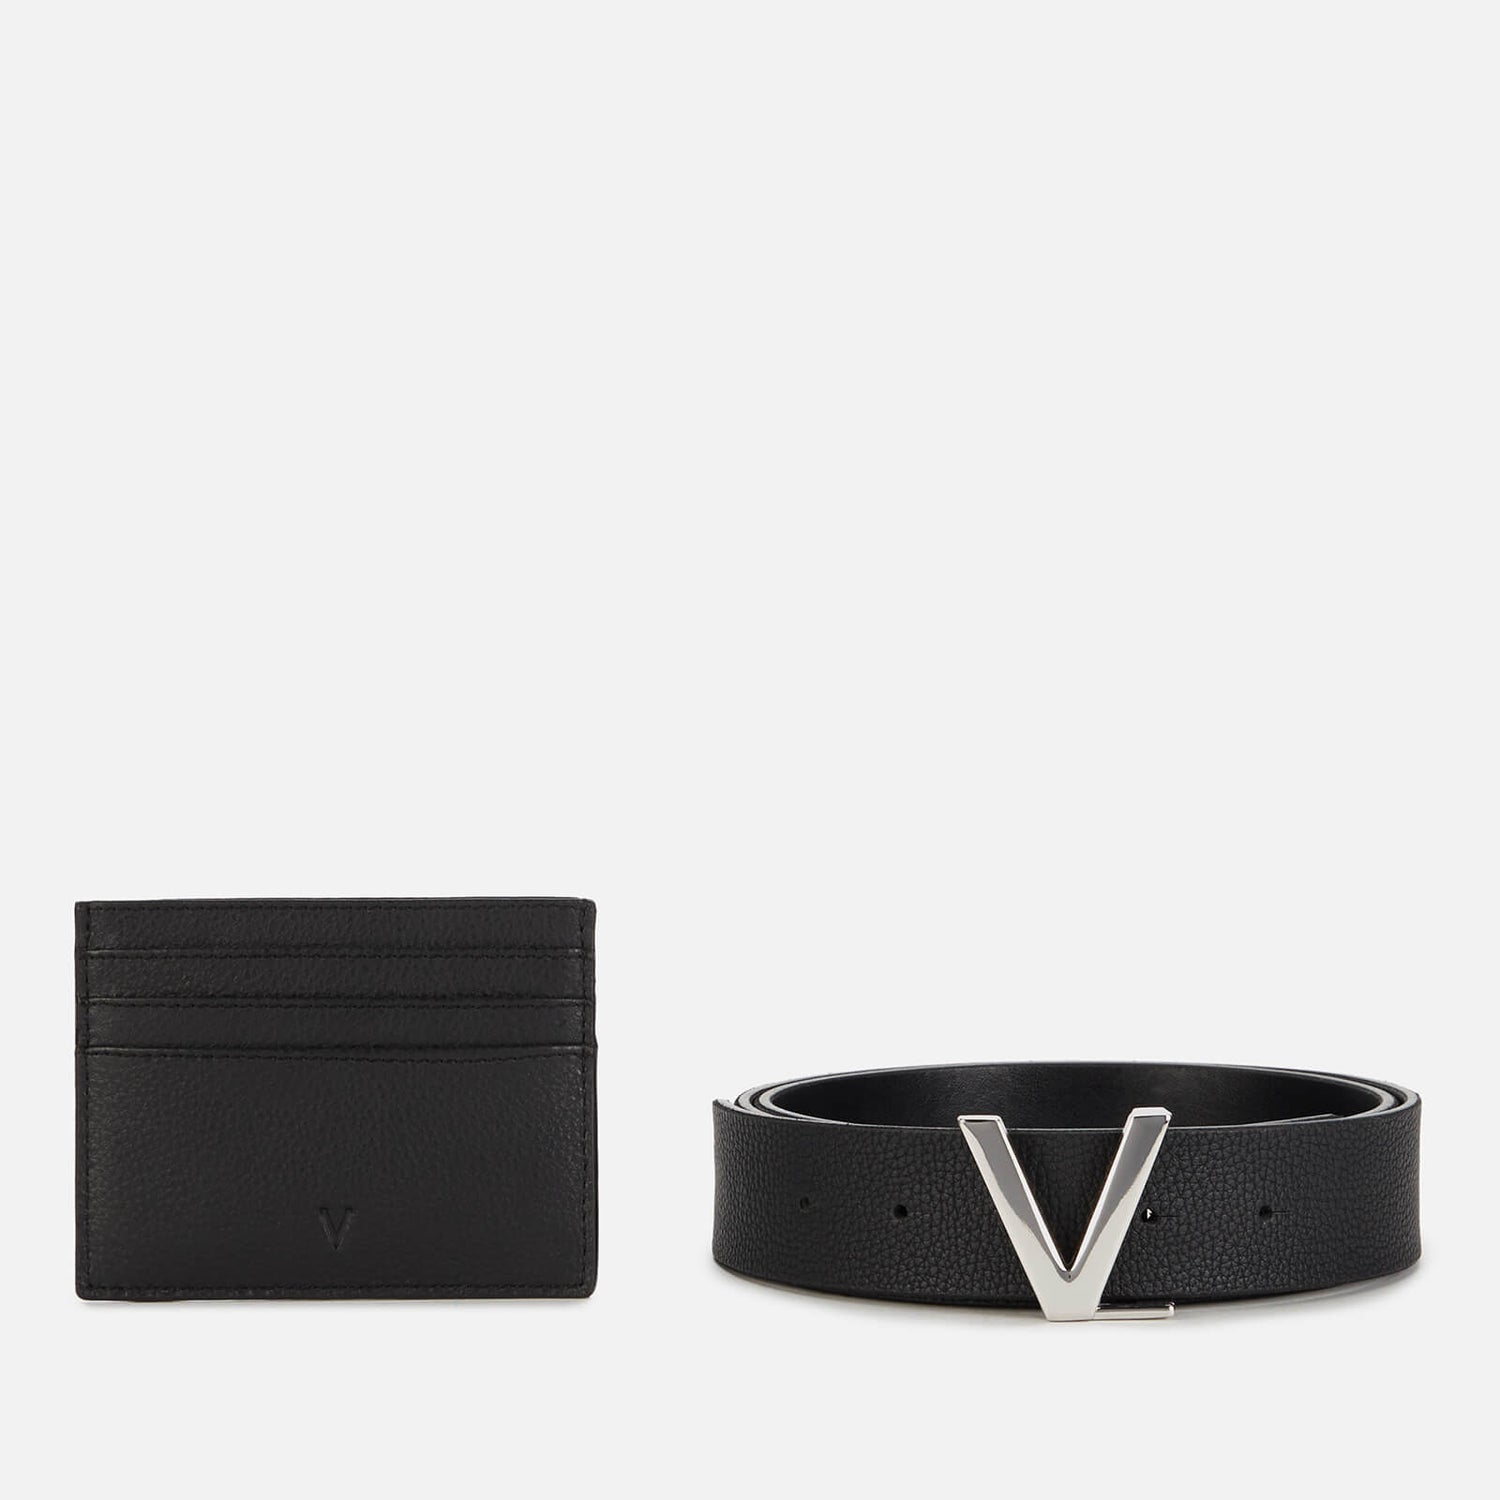 Valentino Bags Men's Mystery Belt And Credit Card Holder Set - Black